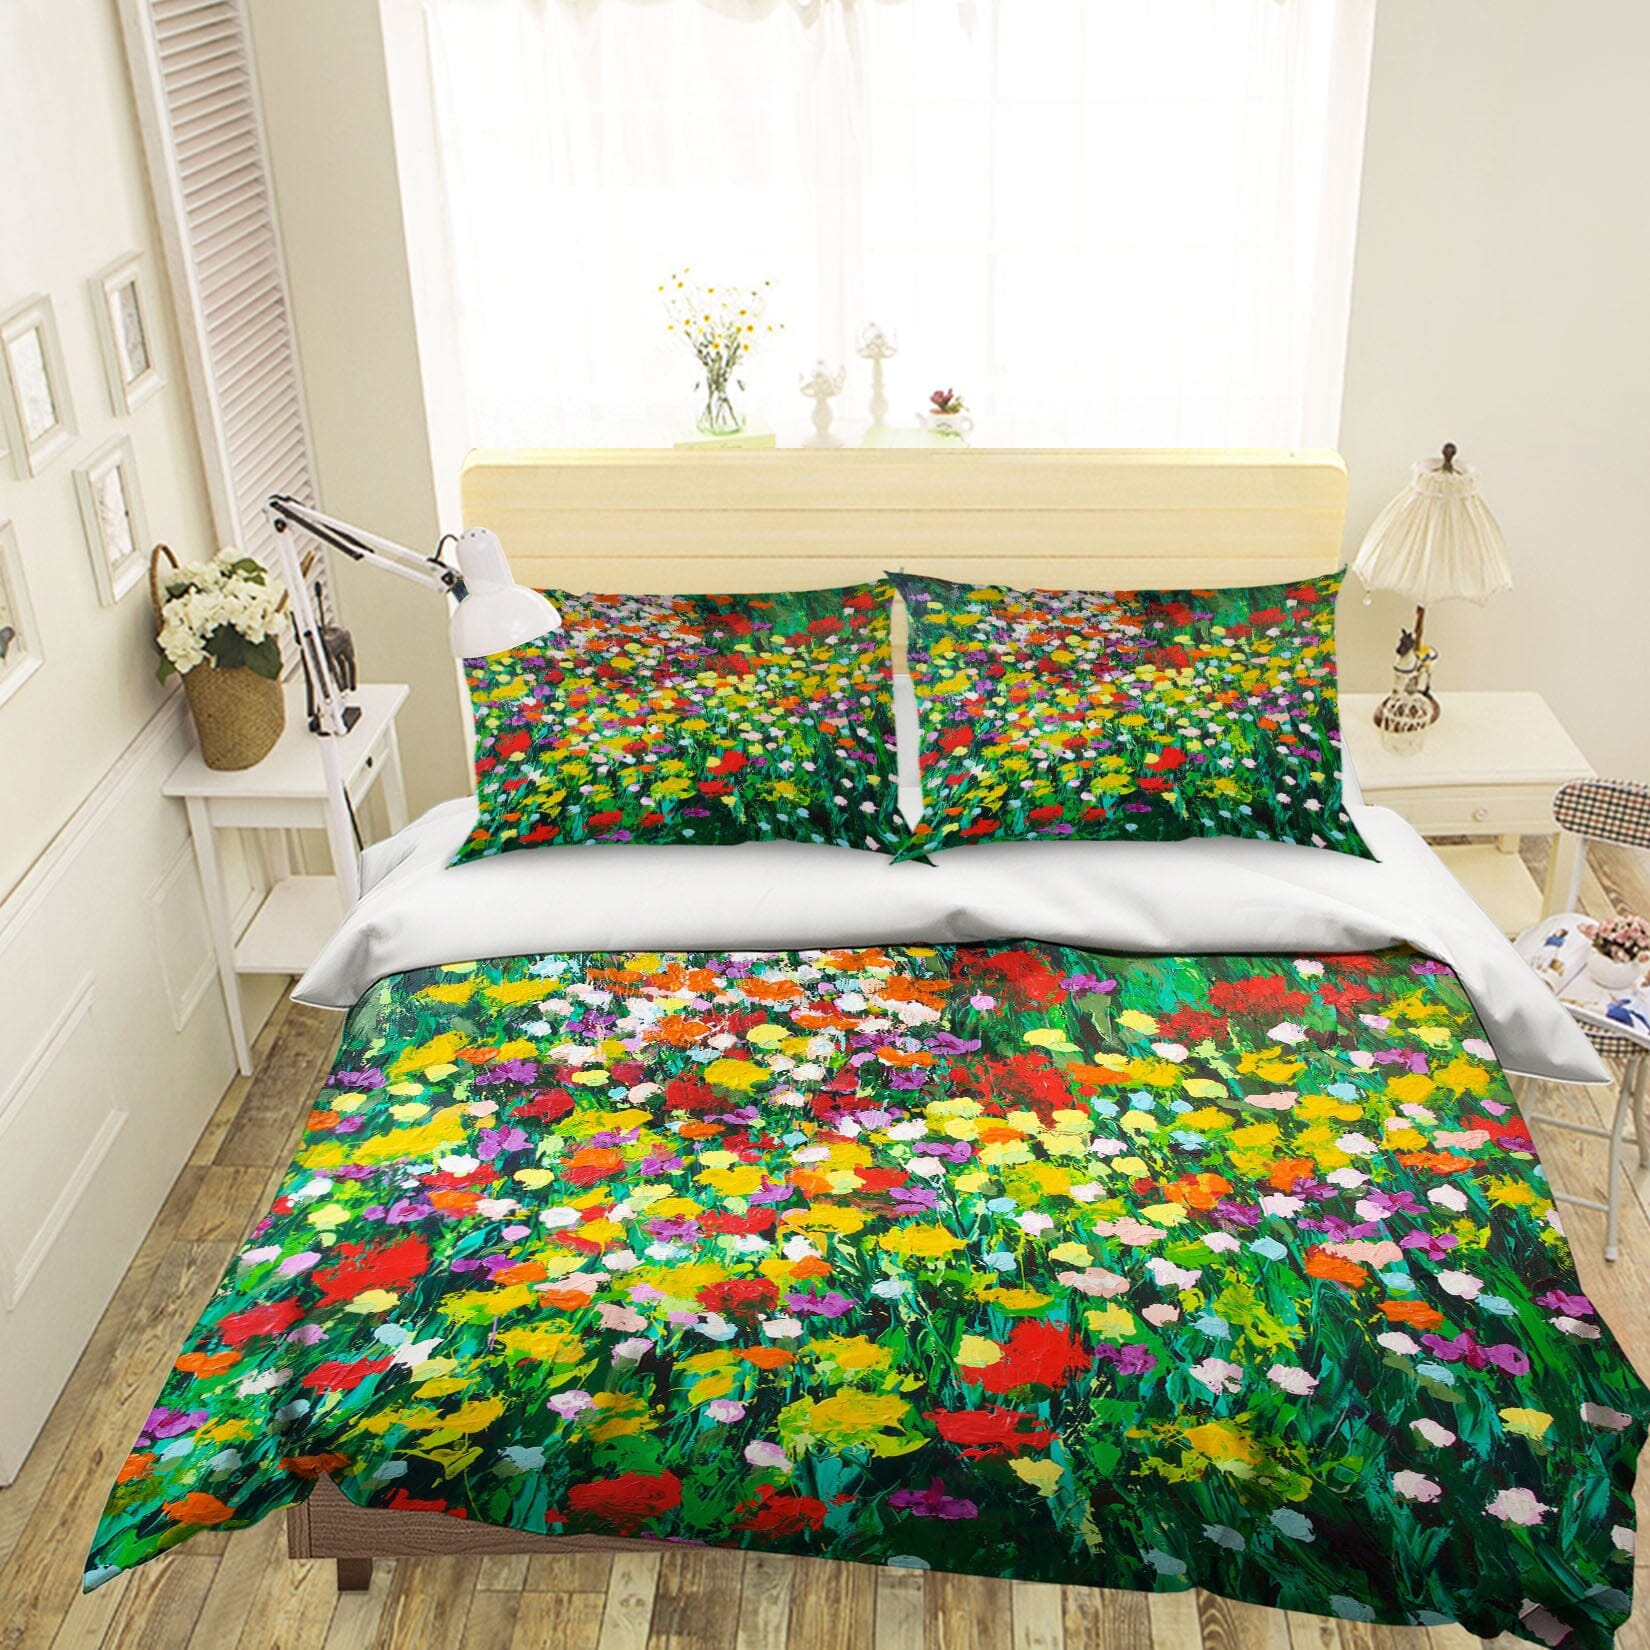 3D Floral Ocean 2018 Allan P. Friedlander Bedding Bed Pillowcases Quilt Quiet Covers AJ Creativity Home 